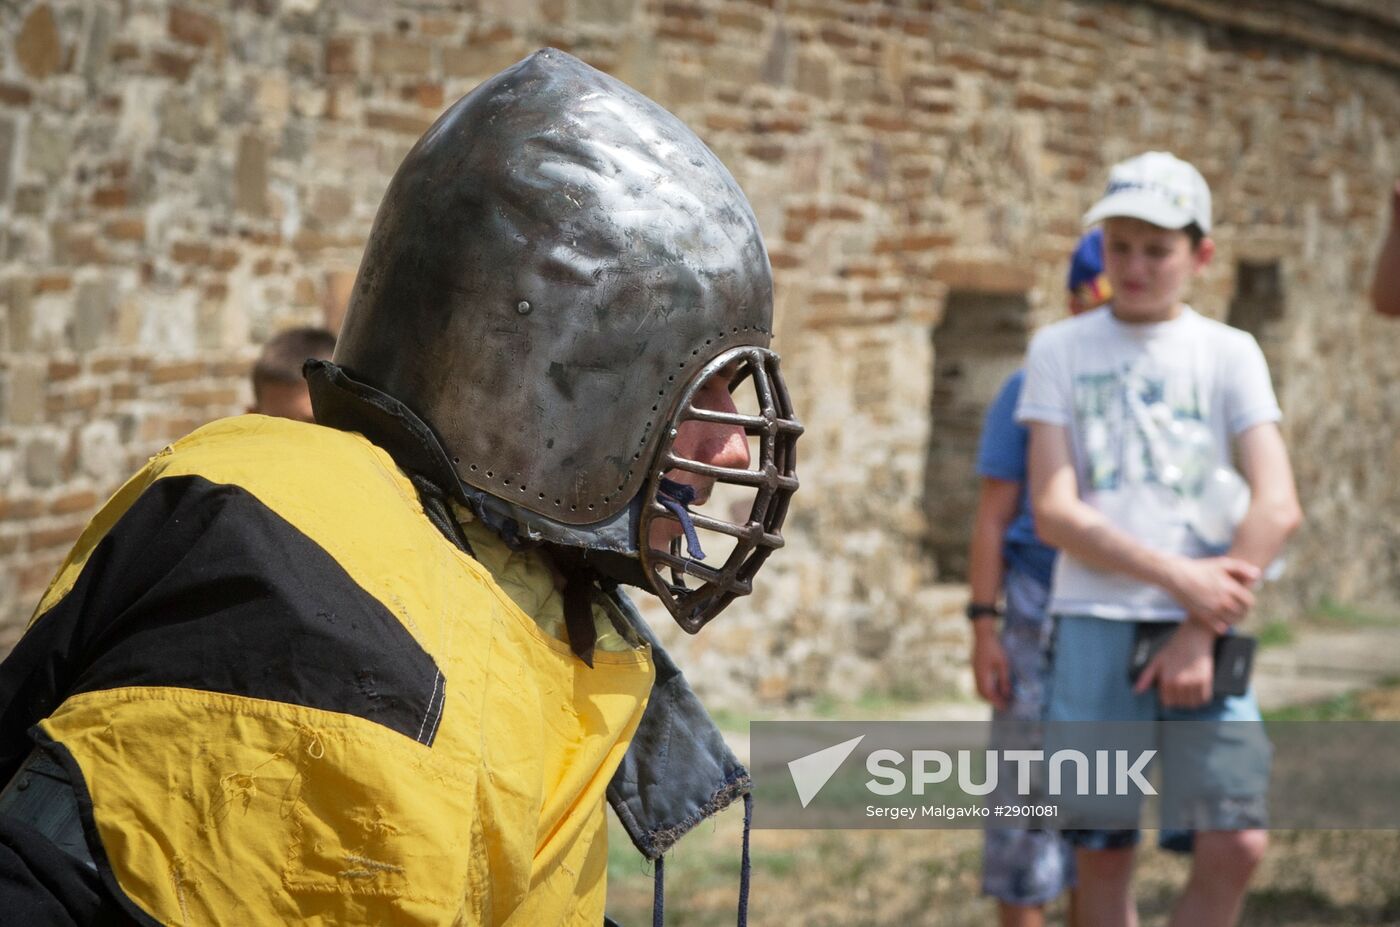 Genoa Helmet international knight festival in Crimea